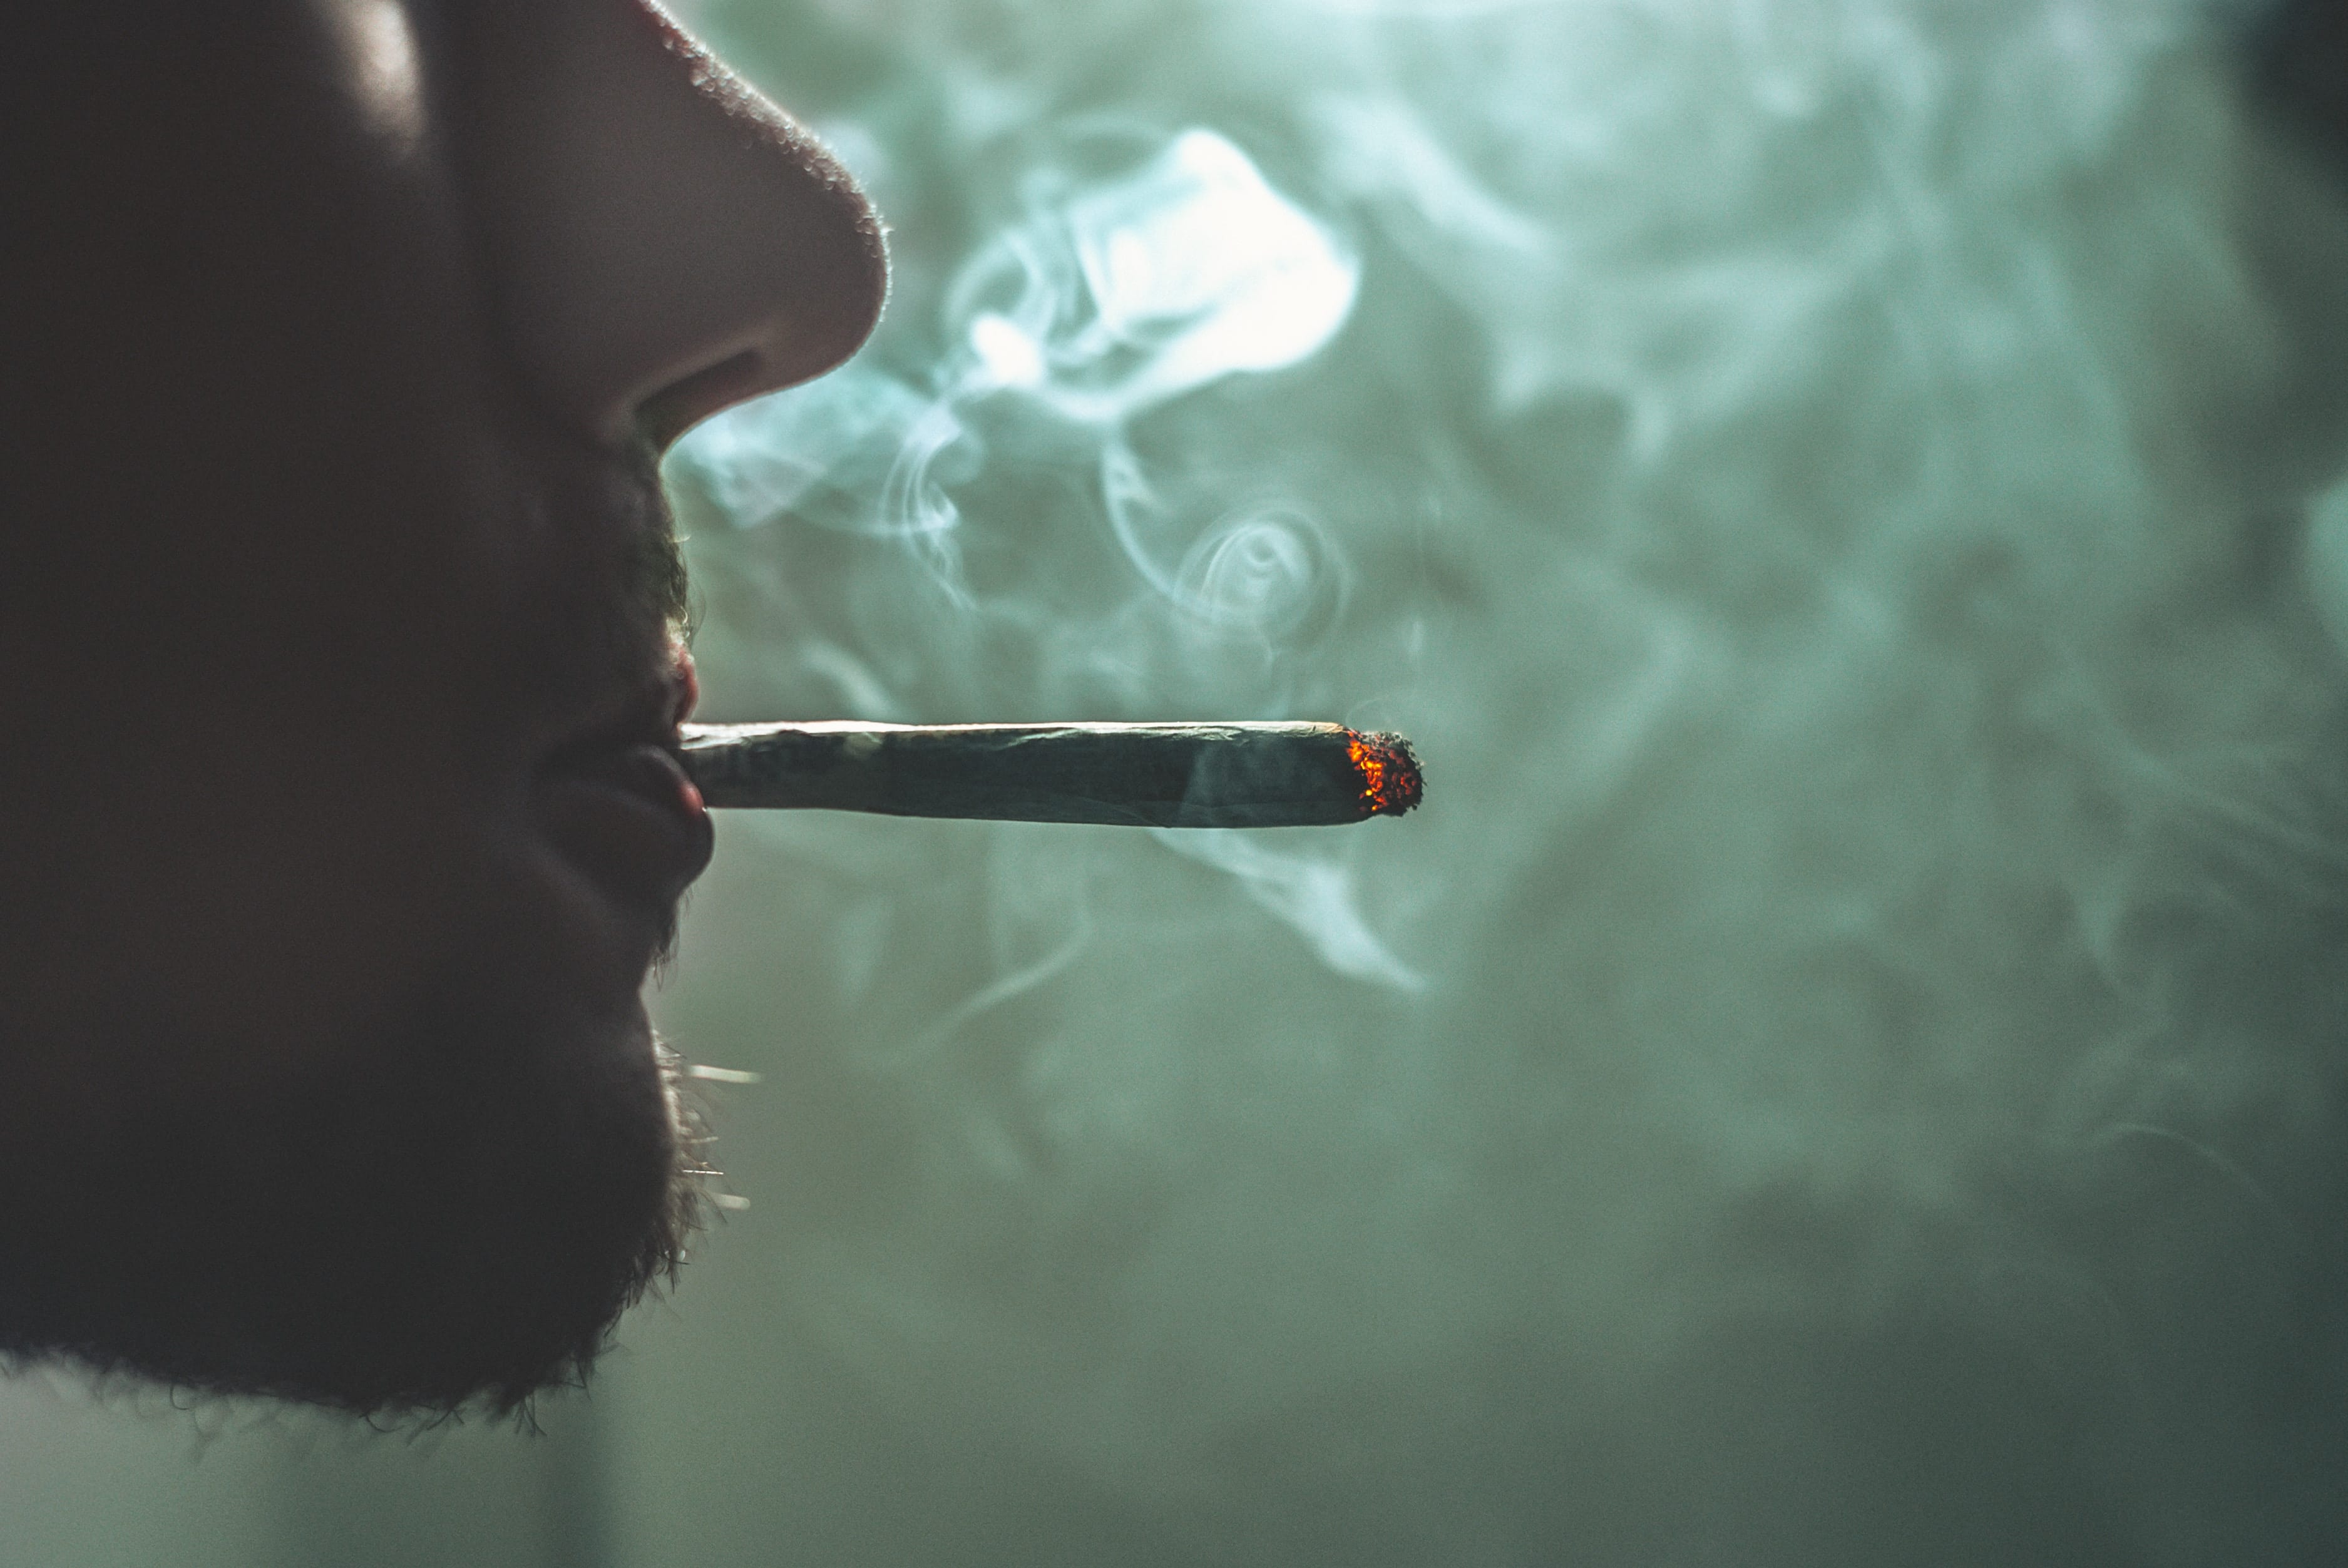 Man smoking a joint; image by GRAS GRÜN, via Unsplash.com.